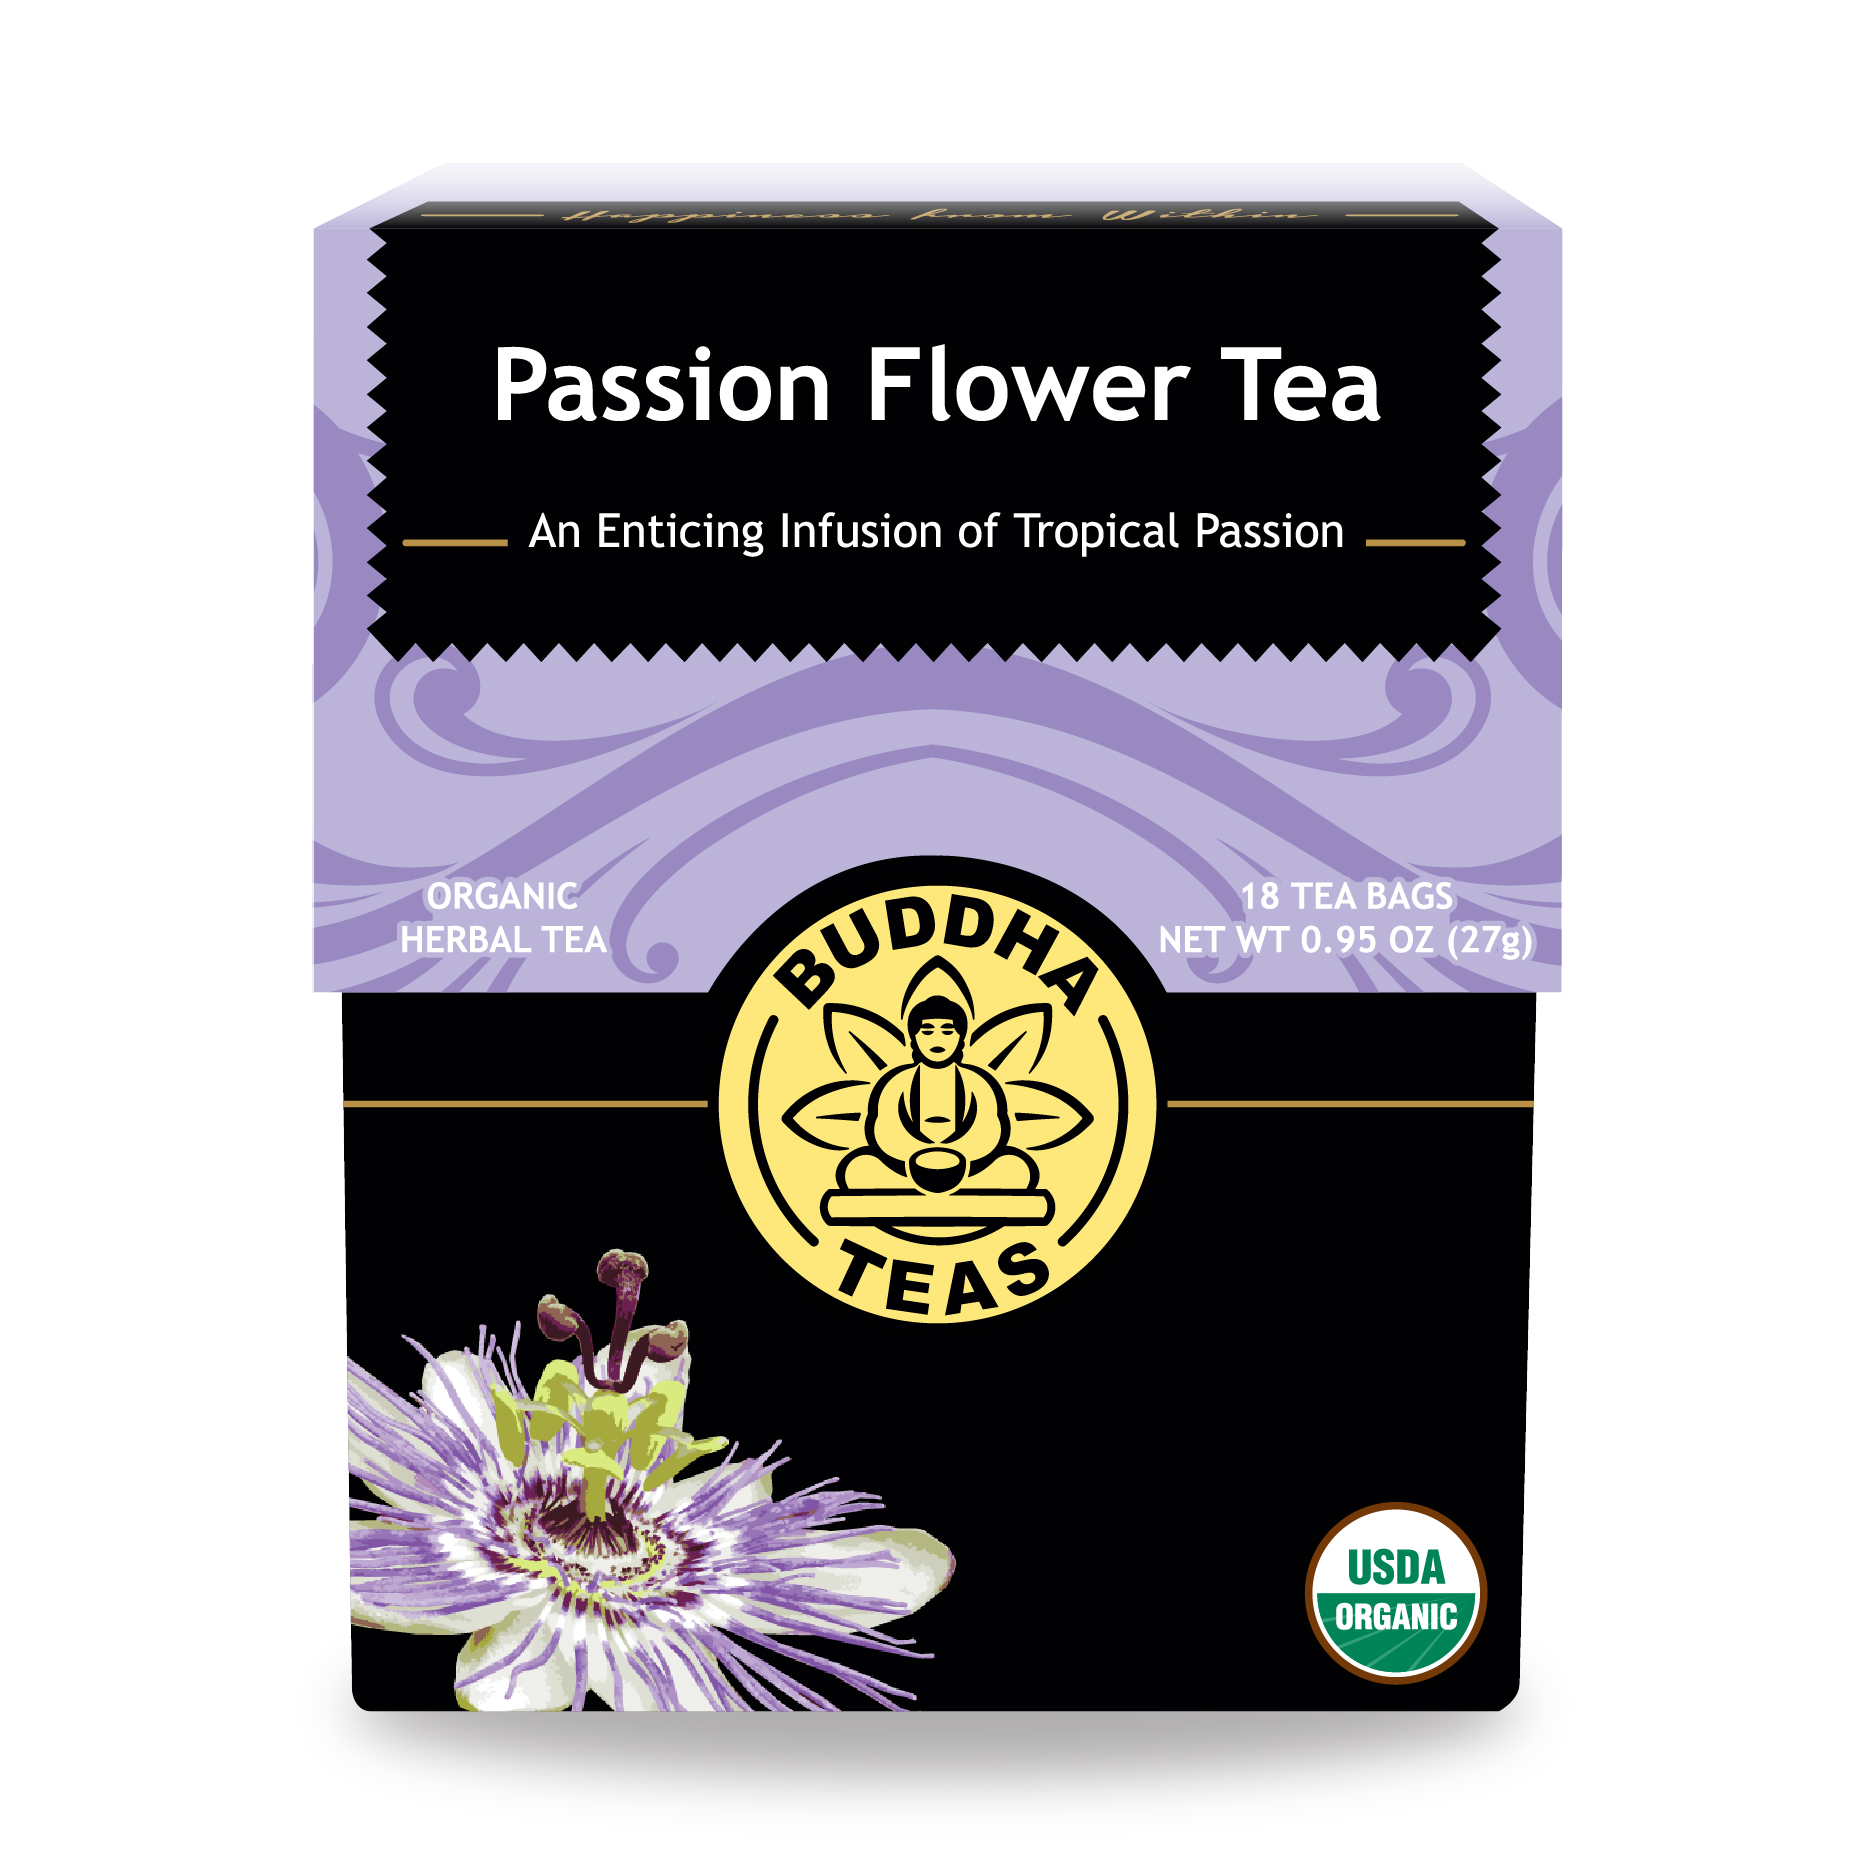 Buy Passion Flower Tea Bags - Enjoy Health Benefits of Organic Teas ...